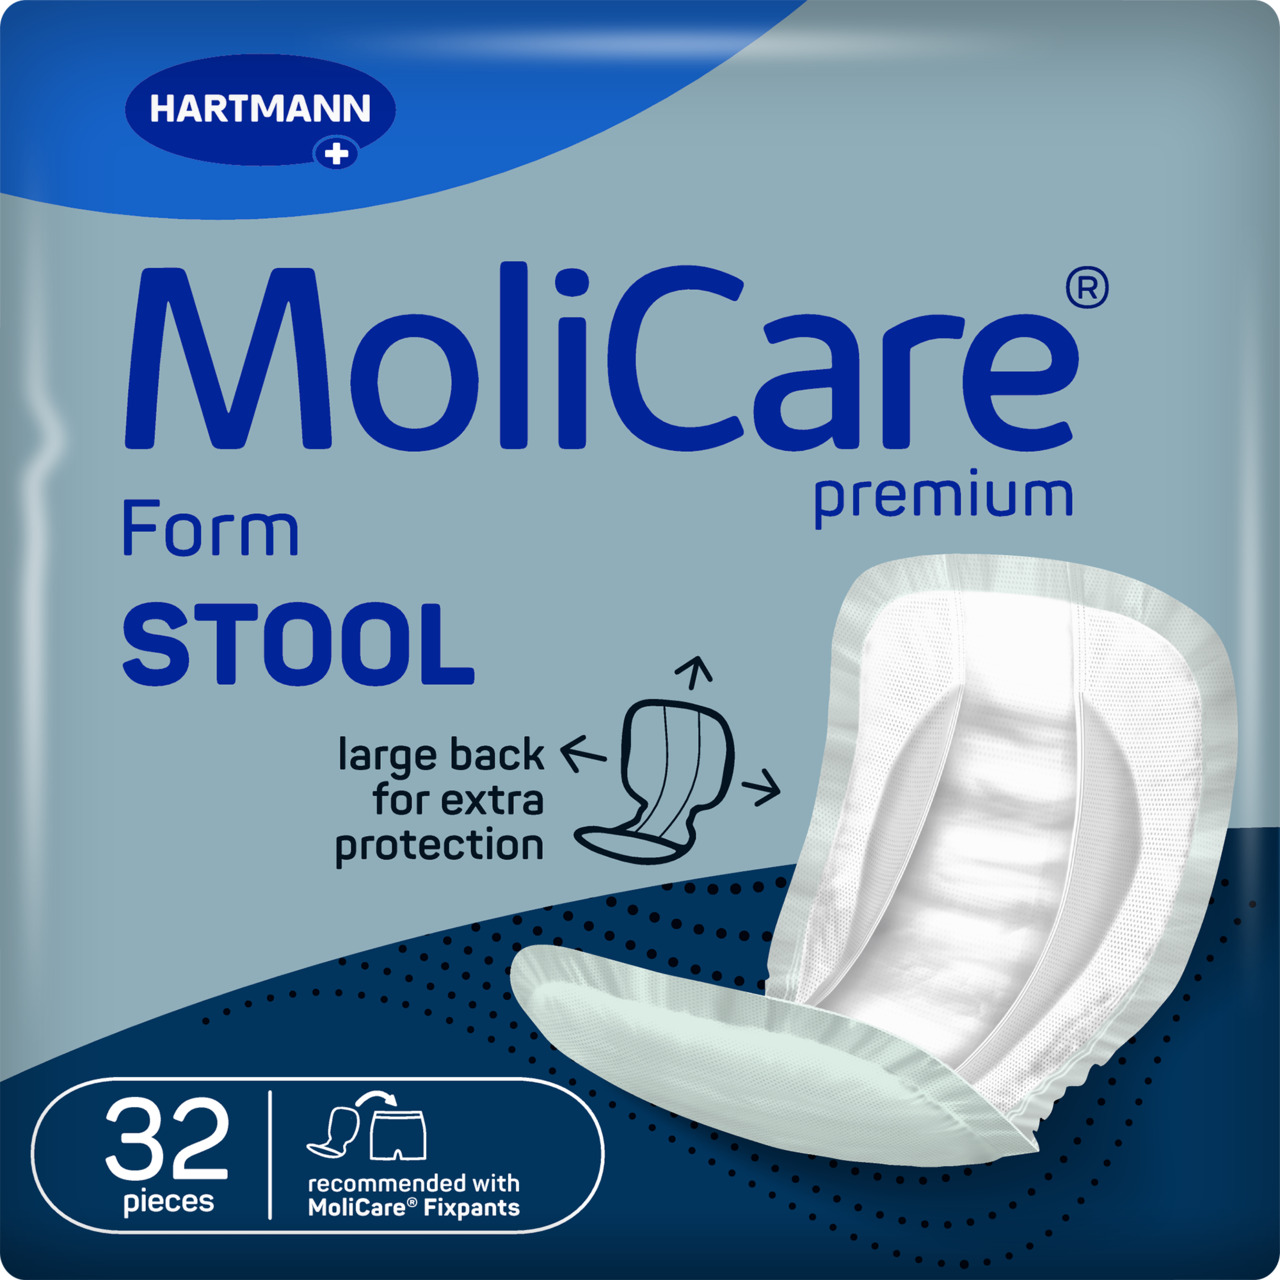 MoliCare Premium Form Stool